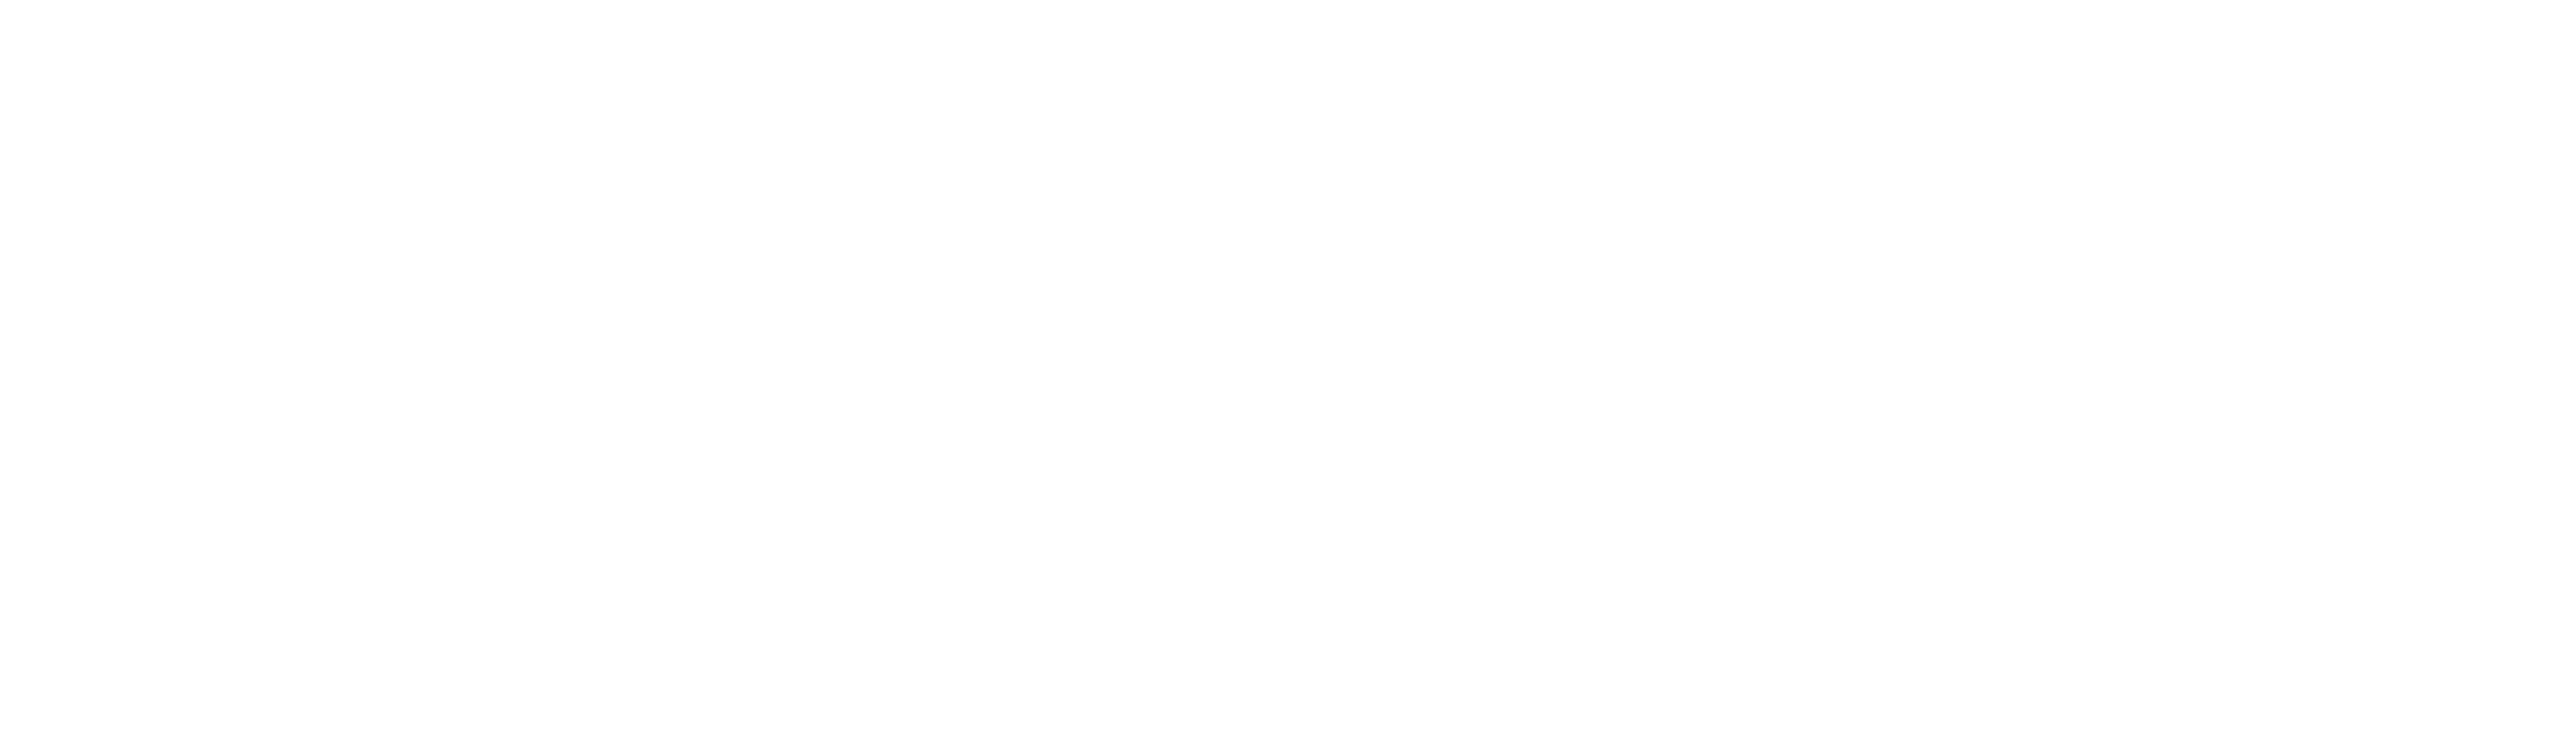 THEKER Robot logo